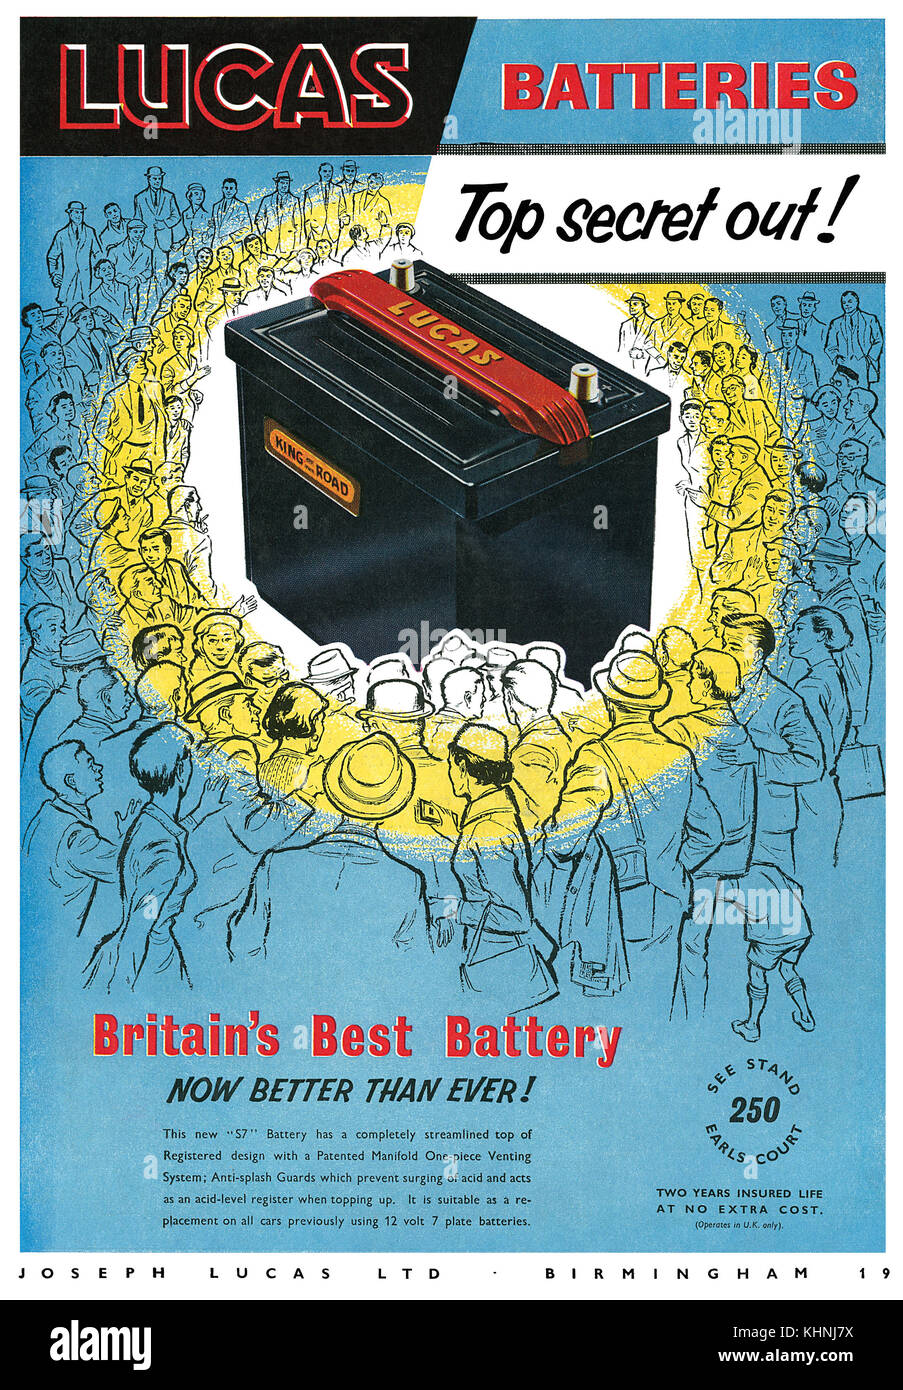 1958 British advertisement for Lucas car batteries Stock Photo - Alamy